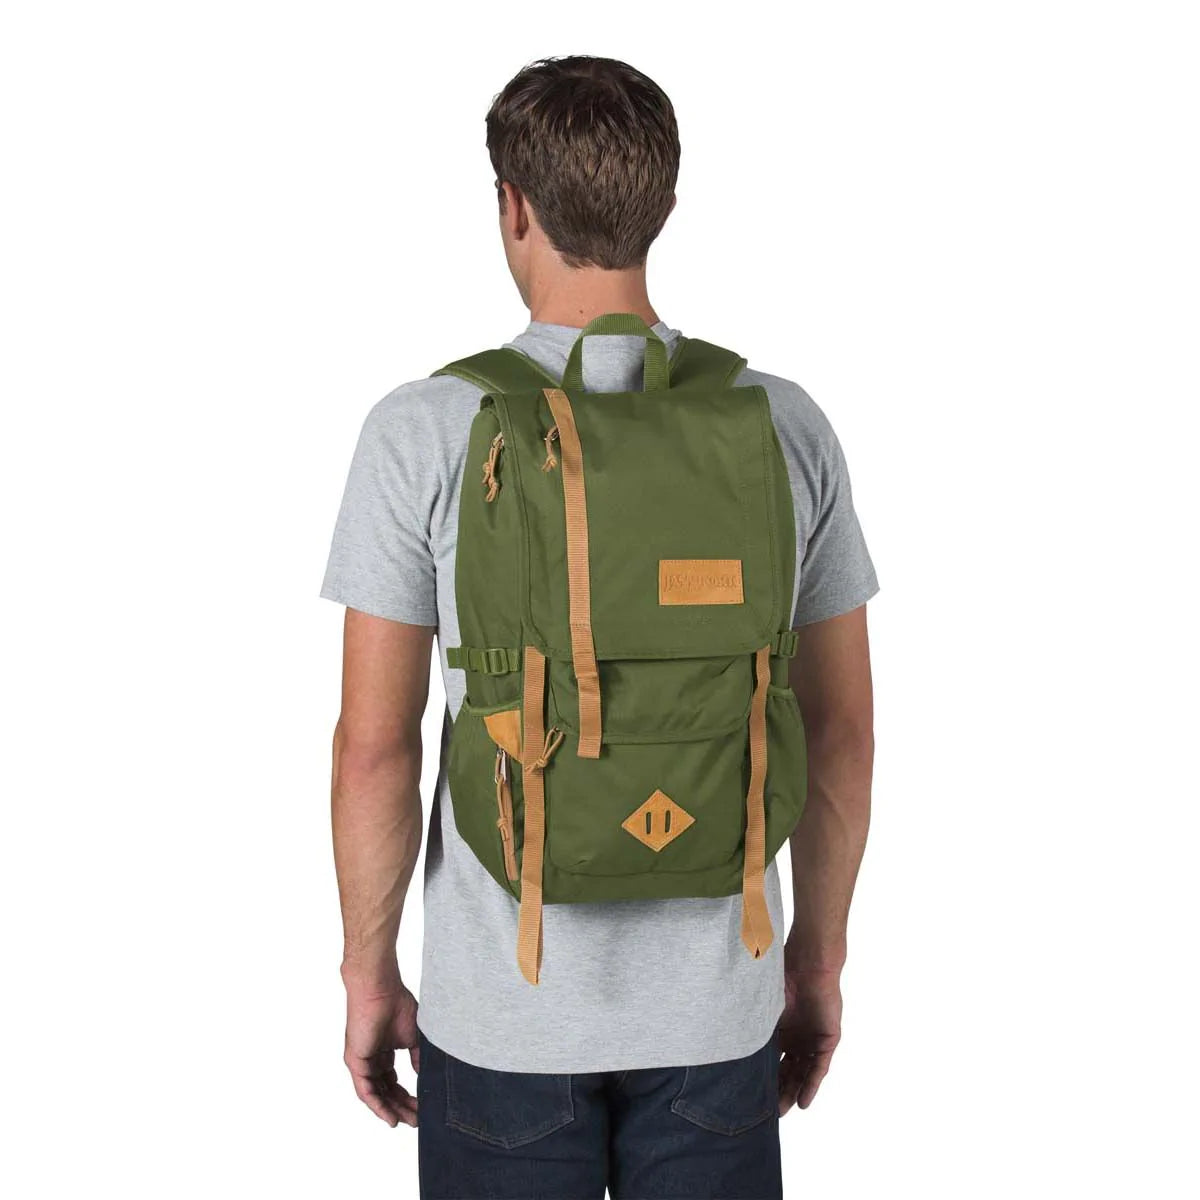 Hatchet Backpack